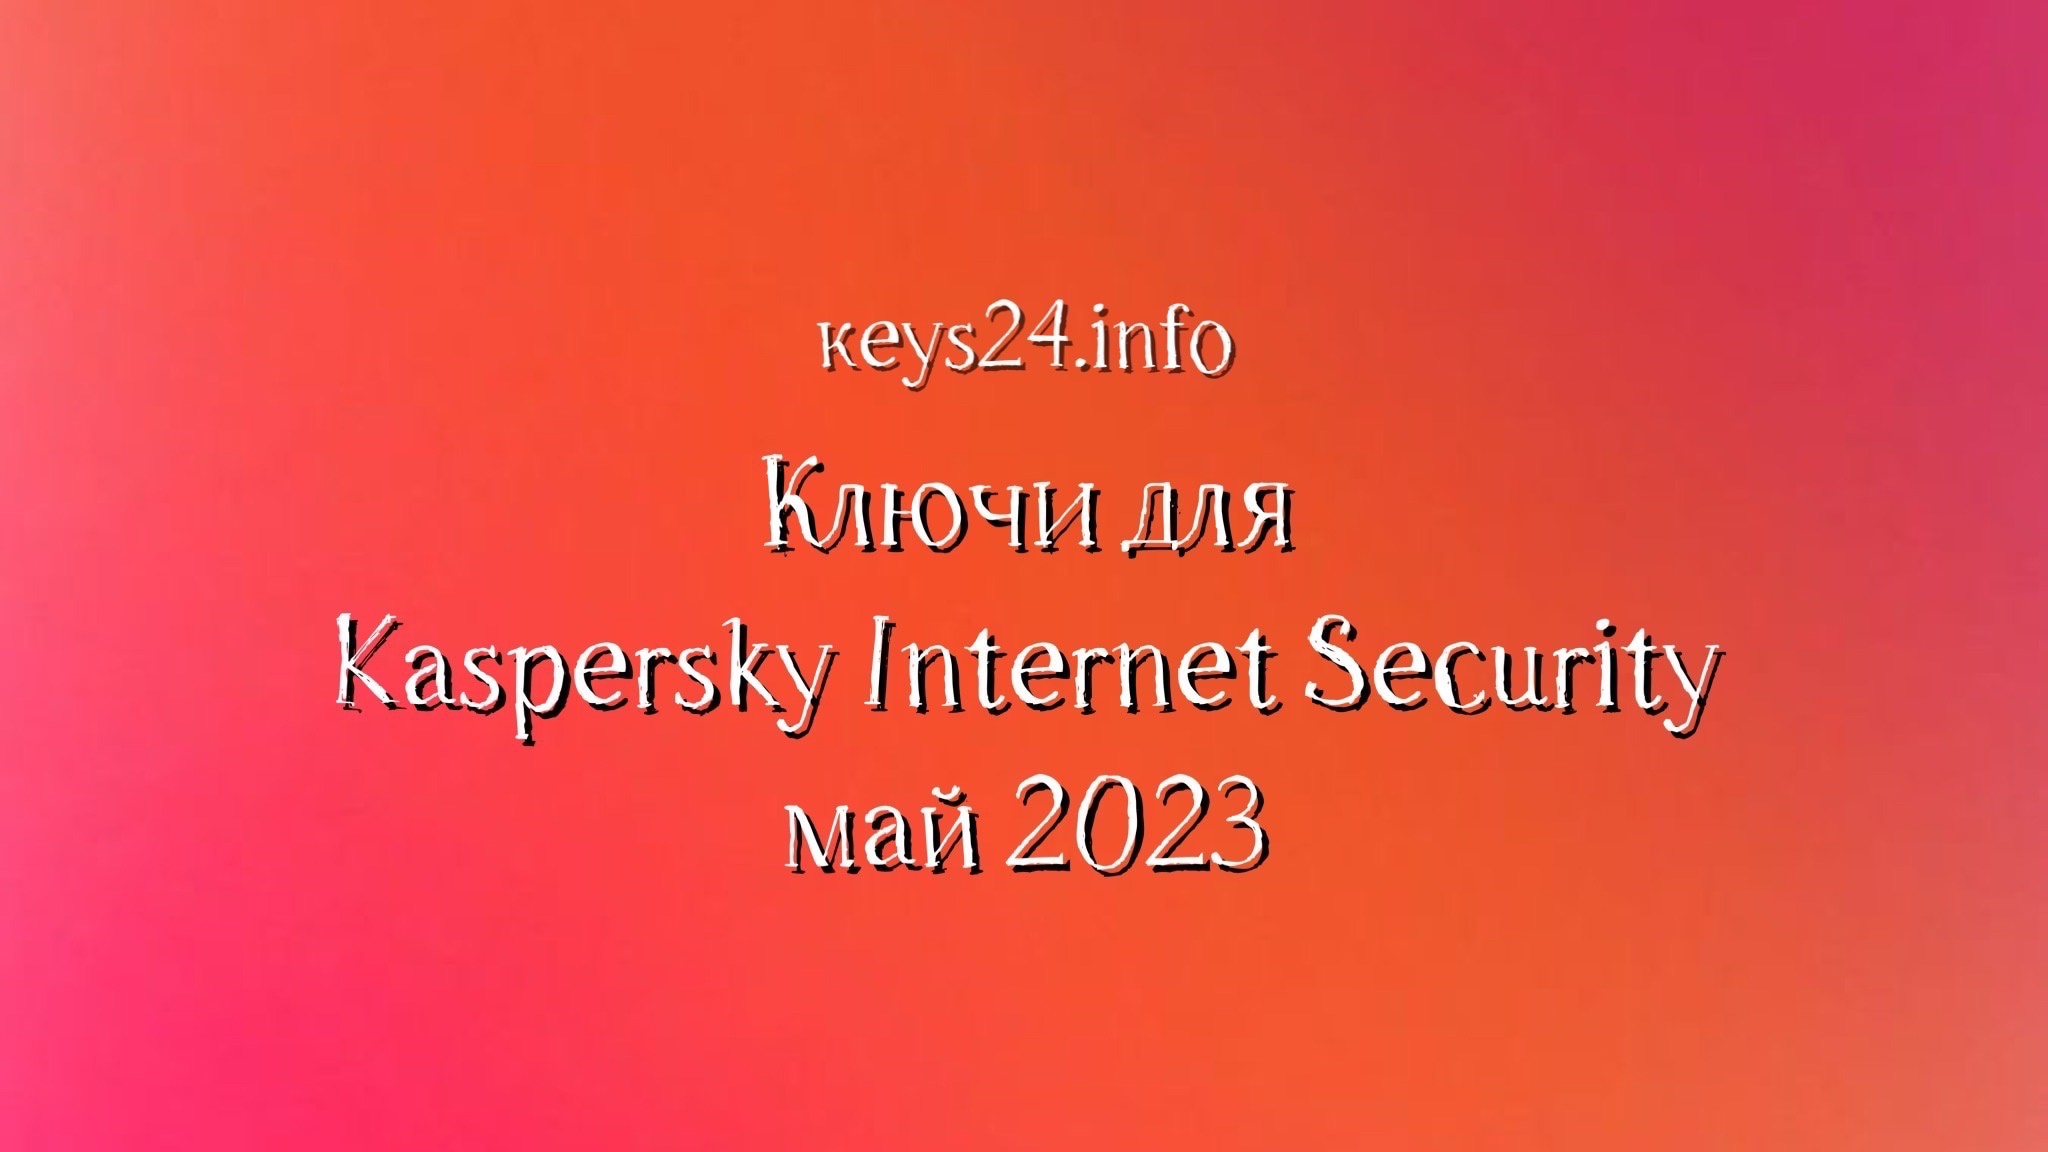 keys for kaspersky internet security may 2023